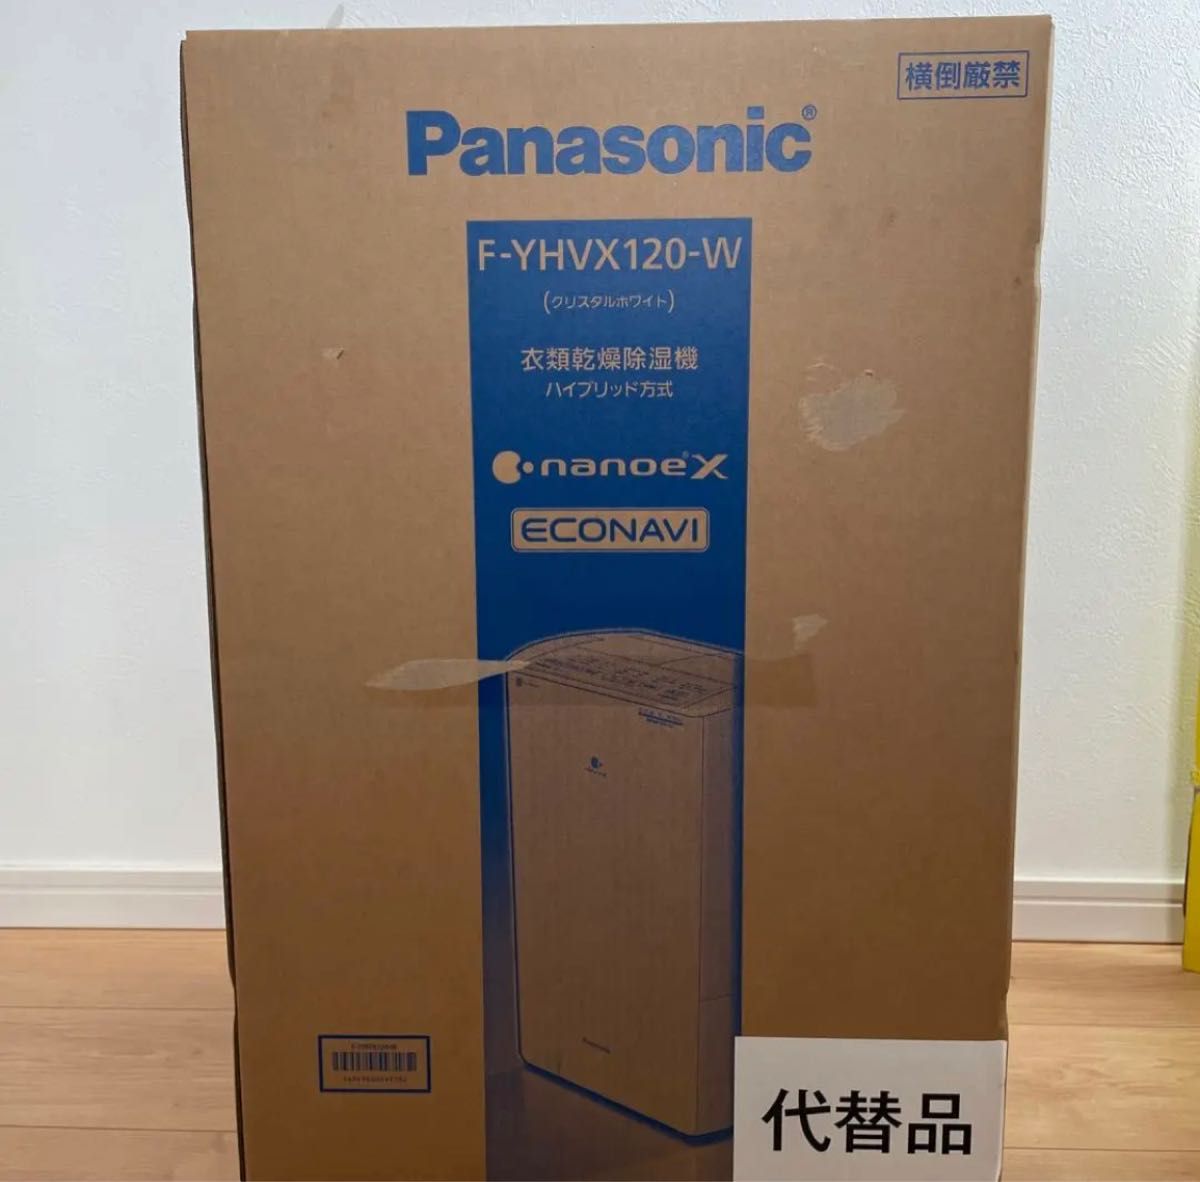 Panasonic 衣類乾燥除湿機 F-YHVX120-W クリスタルホワイト ハイブリッド方式 ナノイーX リコール代替品｜PayPayフリマ